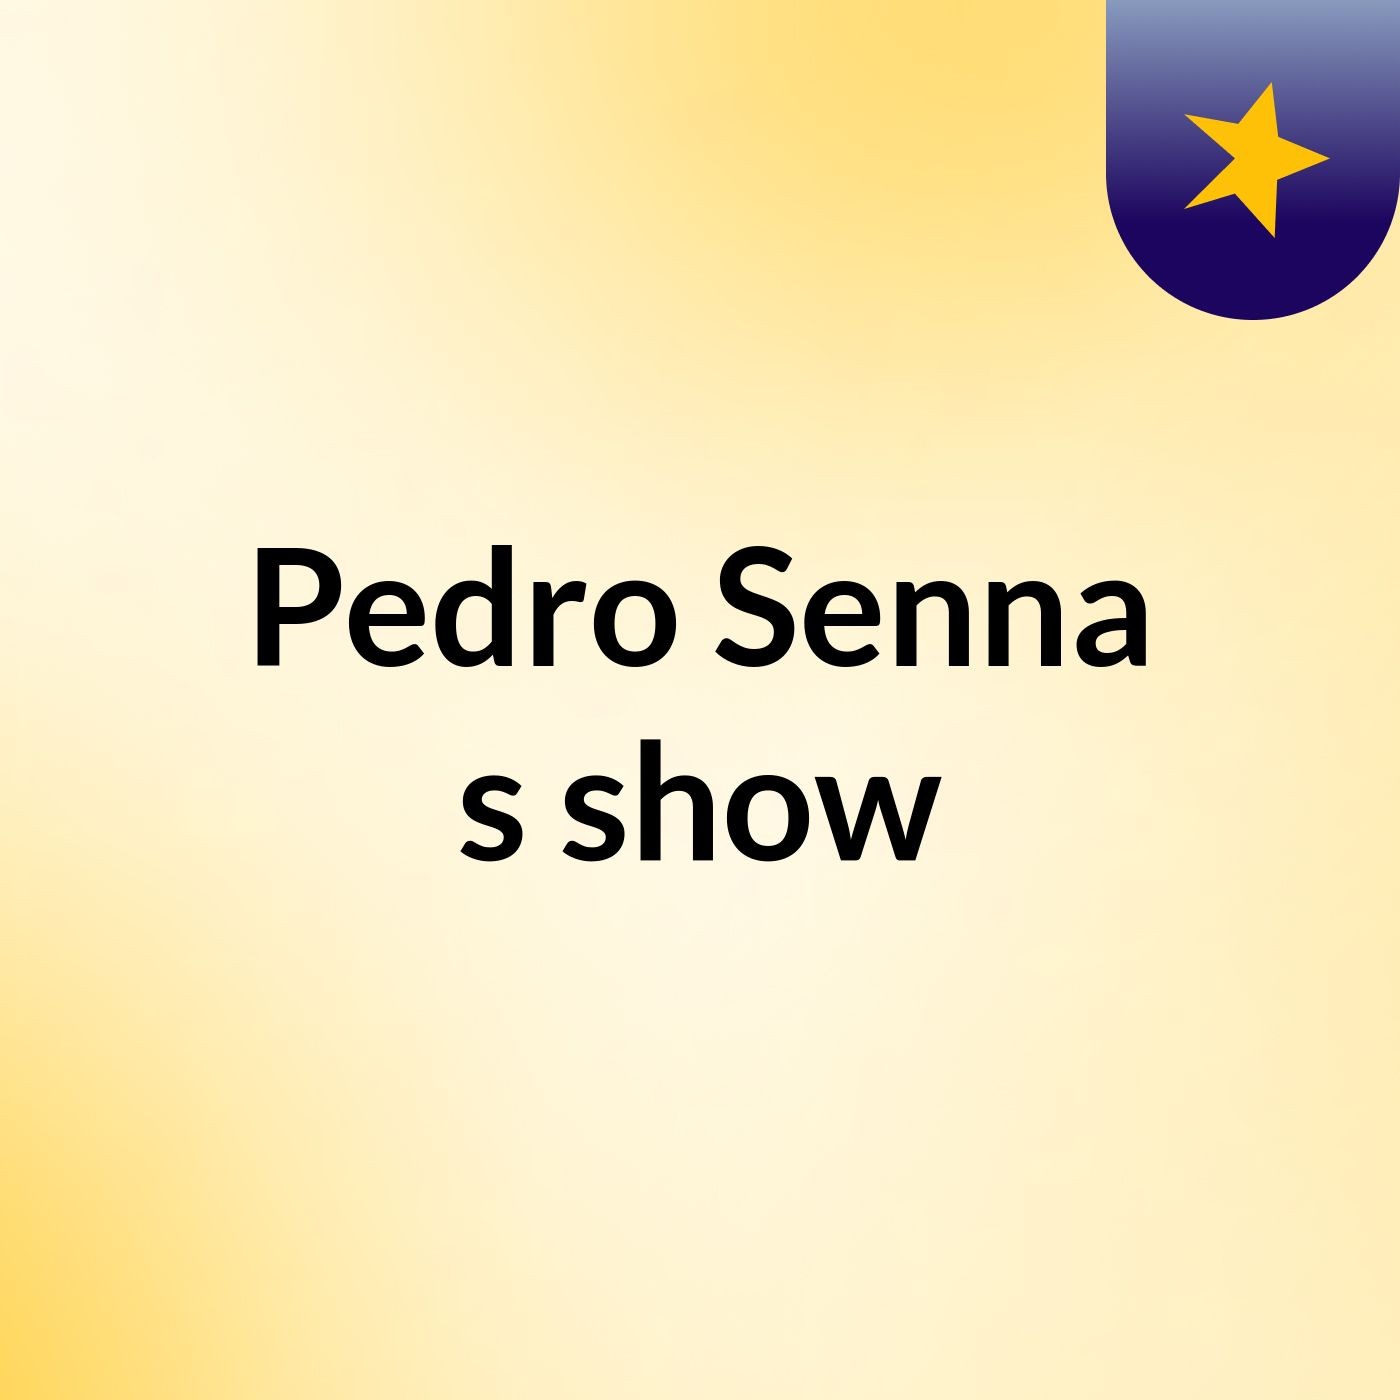 Pedro Senna's show